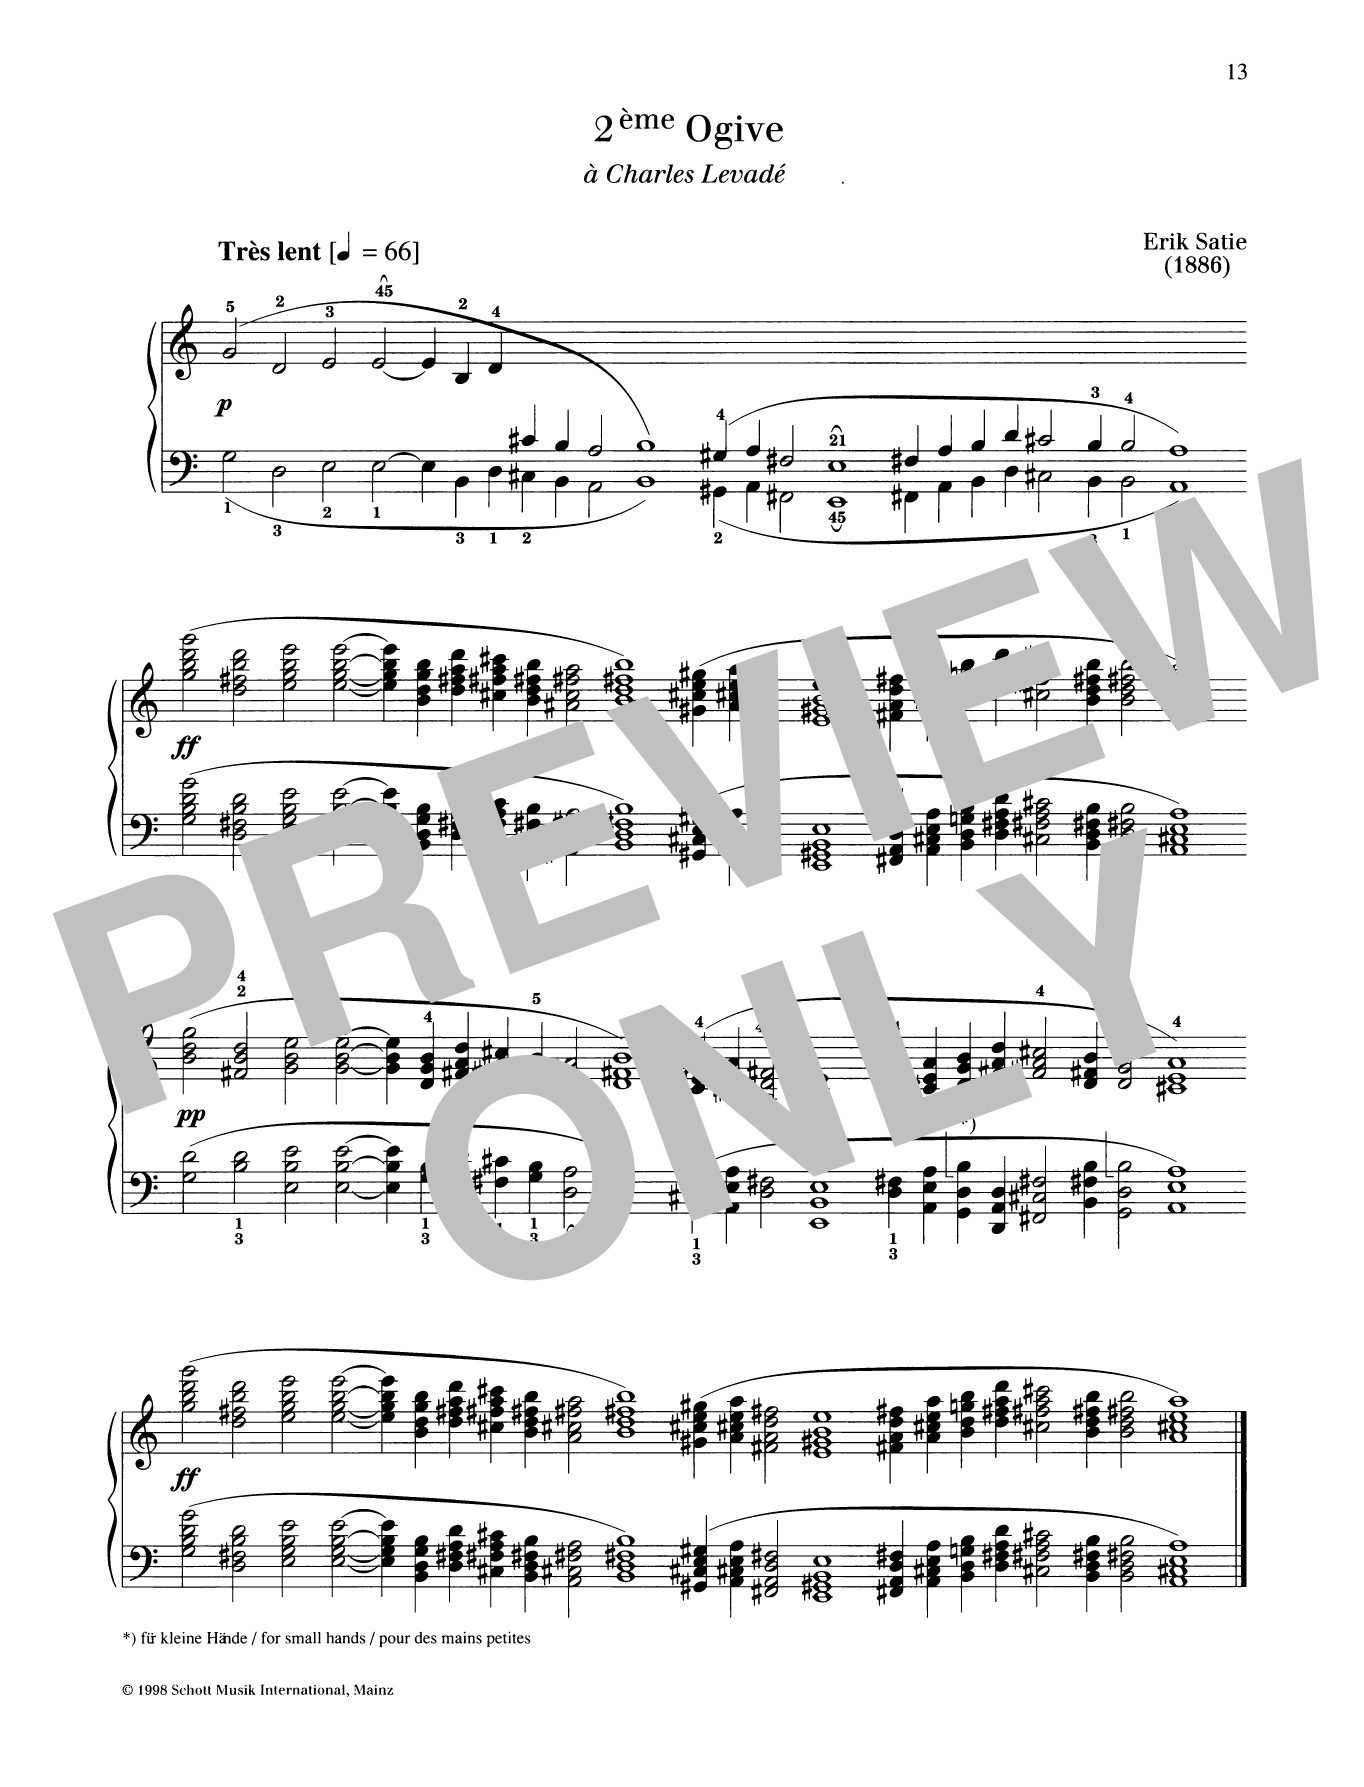 Erik Satie 2ème Ogive Sheet Music Notes & Chords for Piano Solo - Download or Print PDF